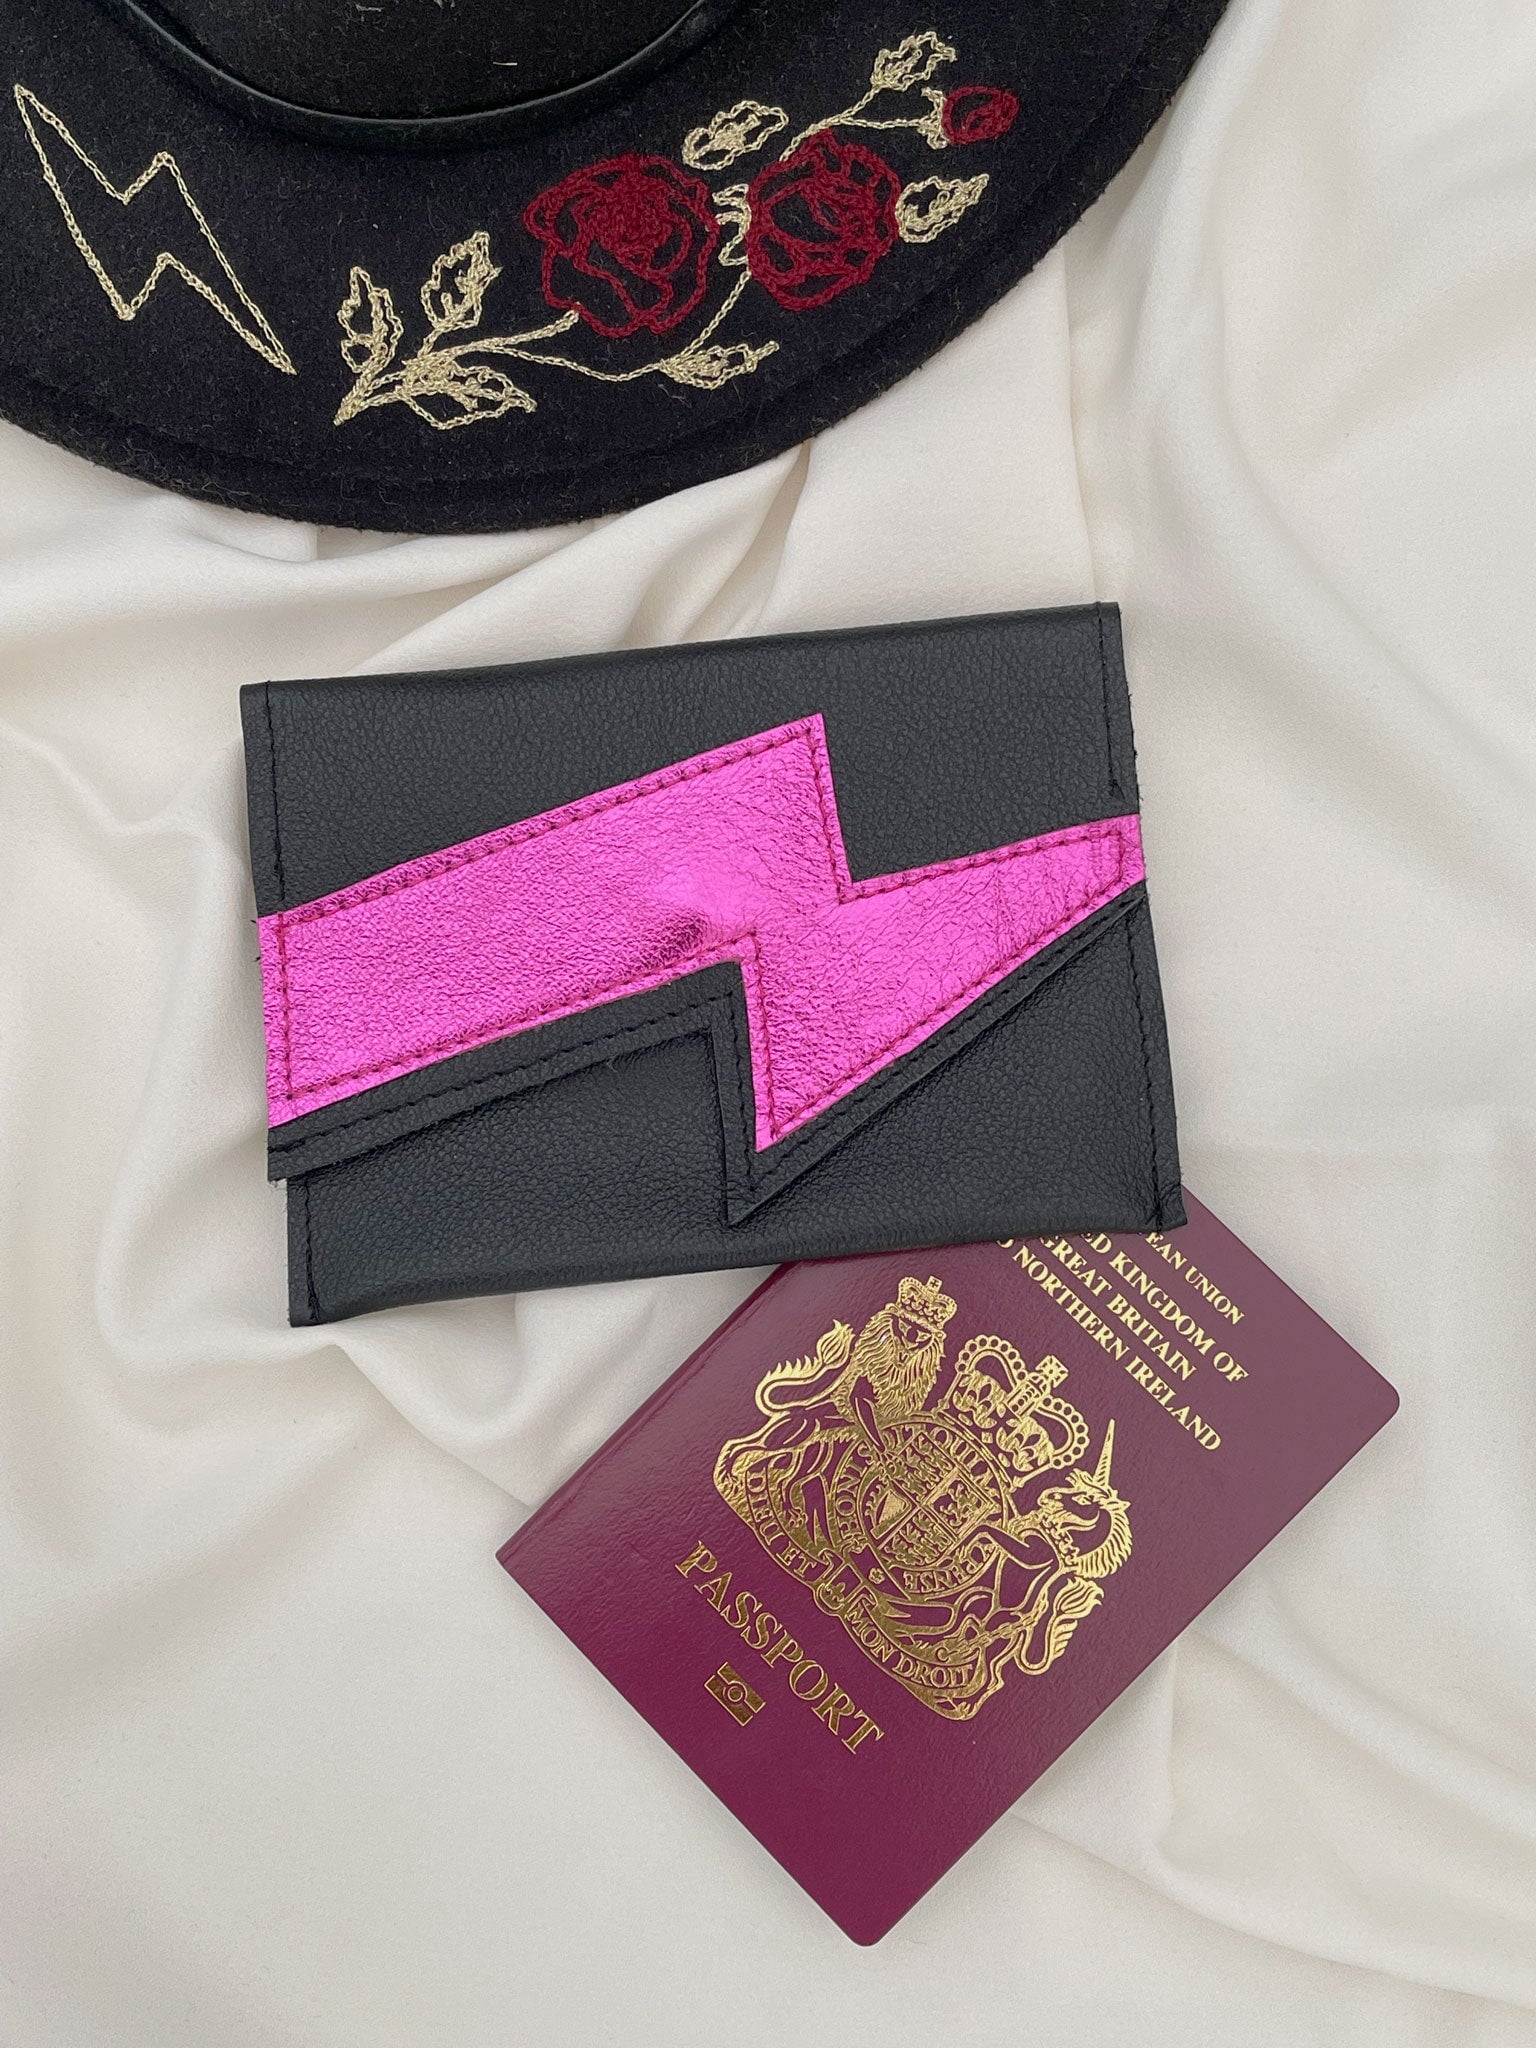 Studded Passport Case - Accessories - beauty